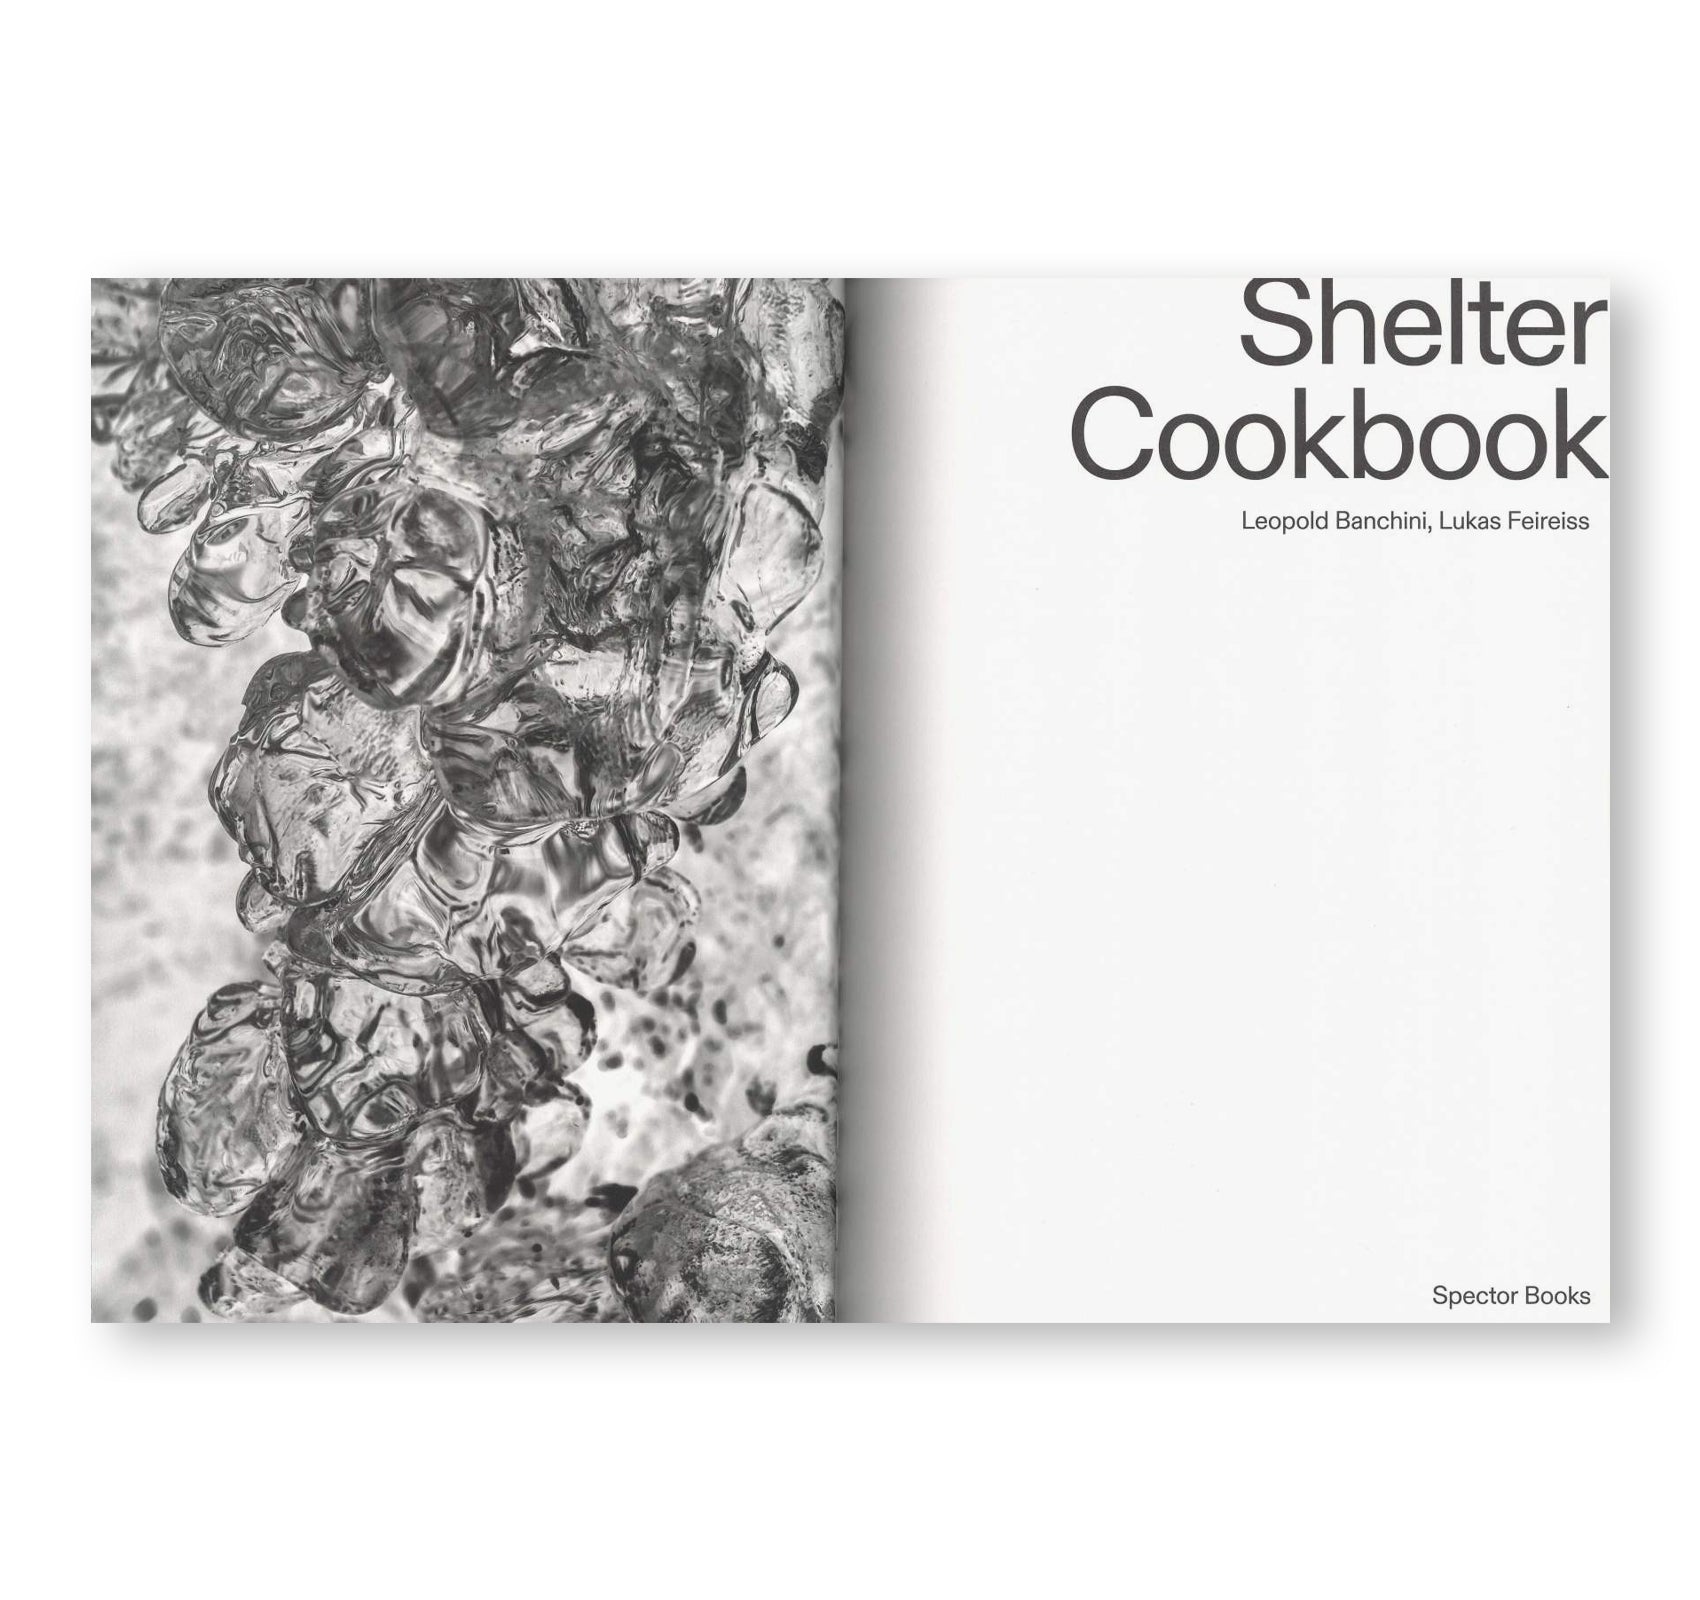 SHELTER COOKBOOK by Leopold Banchini, Lukas Feireiss & Lloyd Kahn